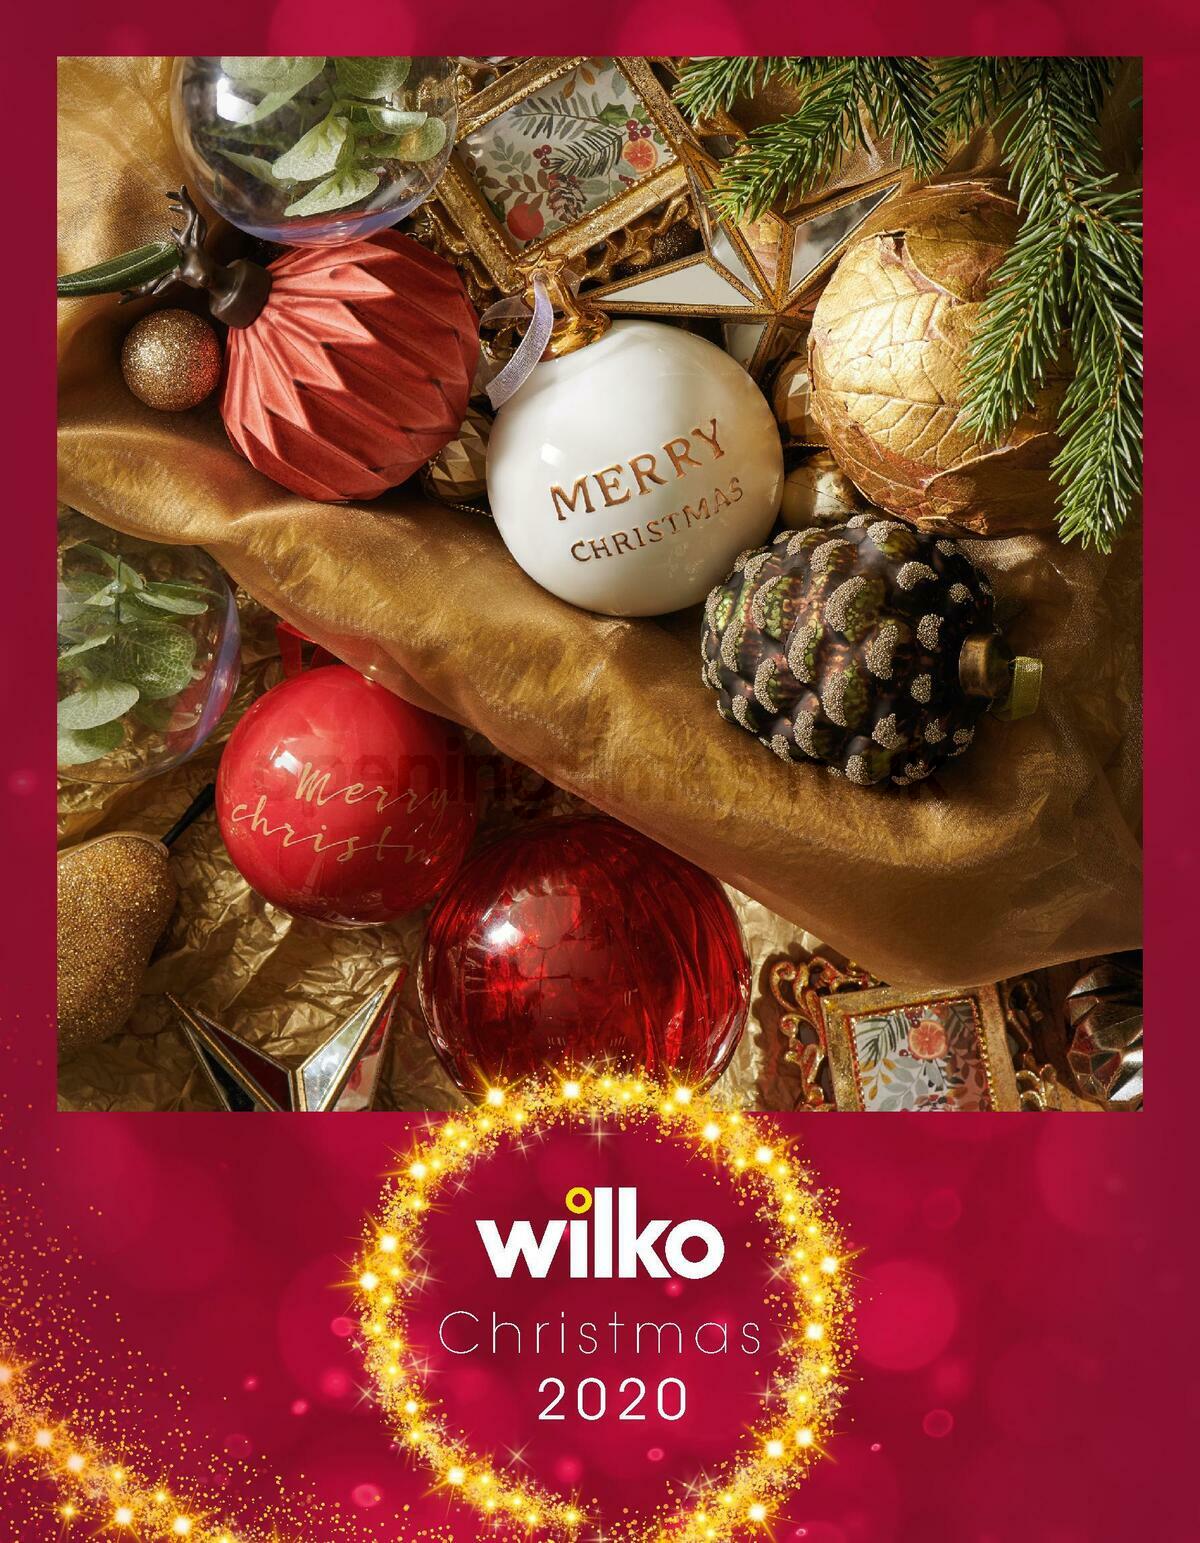 Wilko Lookbook Christmas 2020 Offers from 27 September